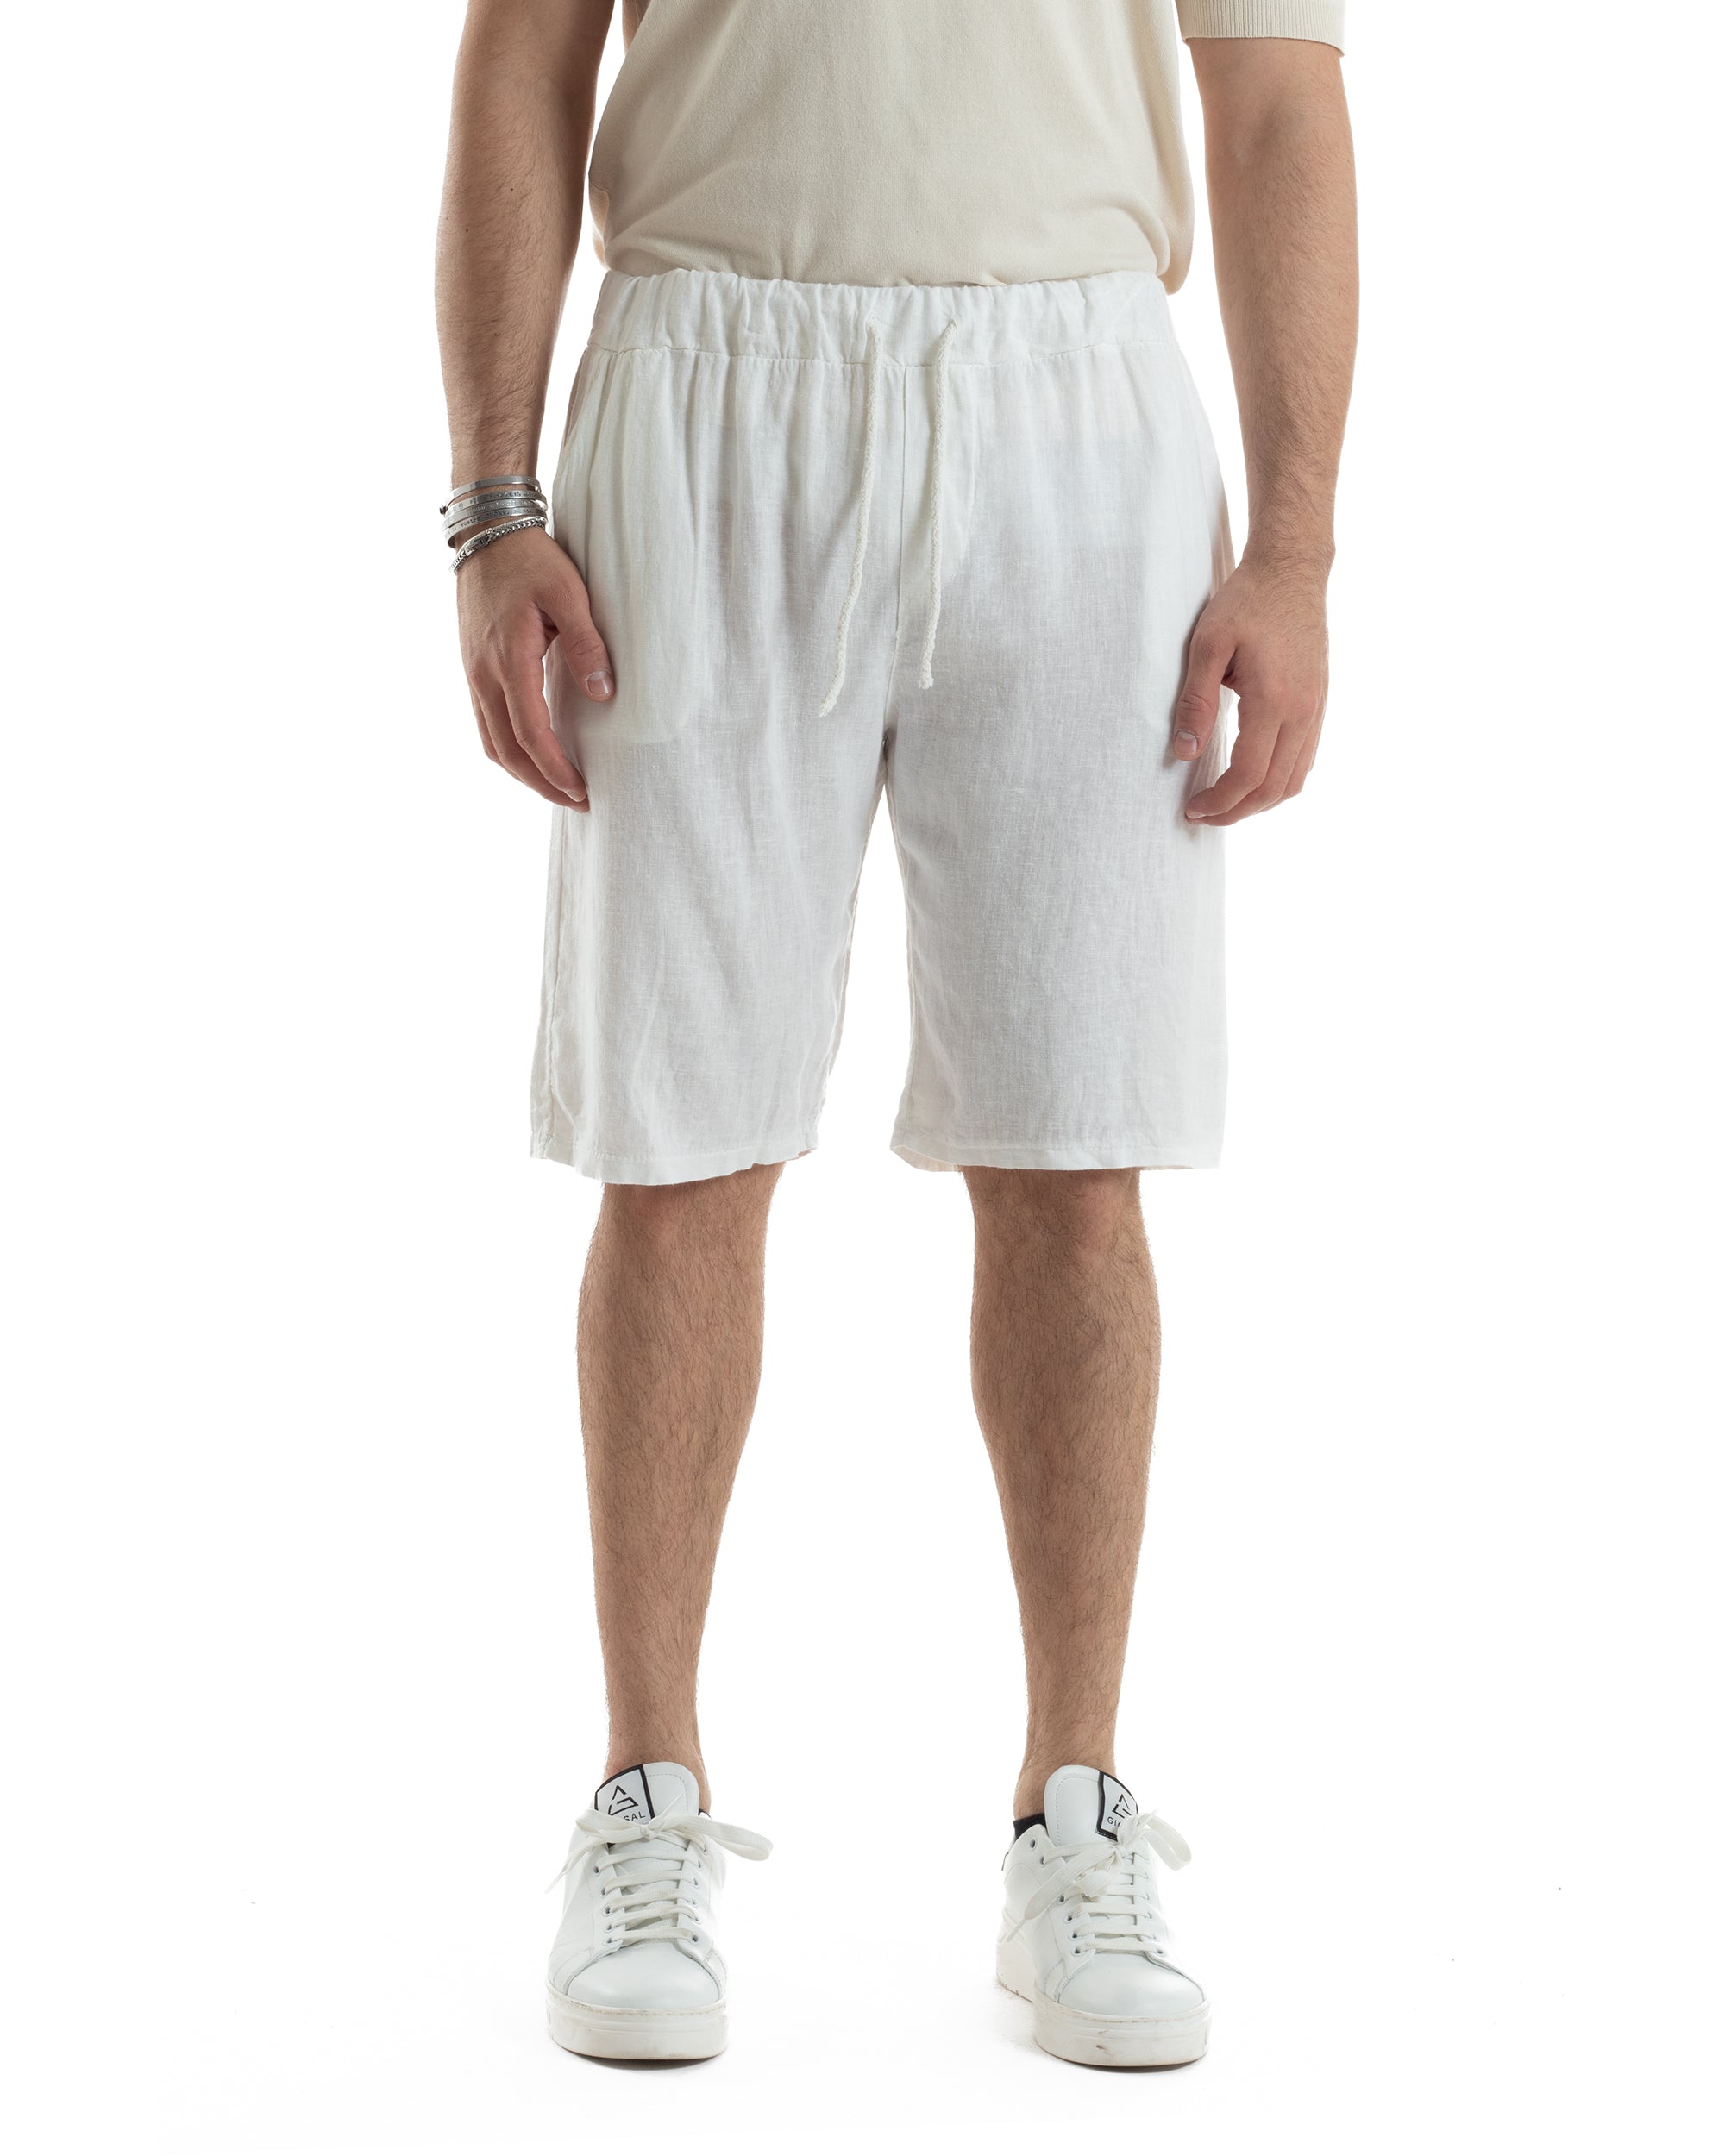 Bermuda Shorts Men's Linen Solid Color Brick Basic Giosal-PC1920A